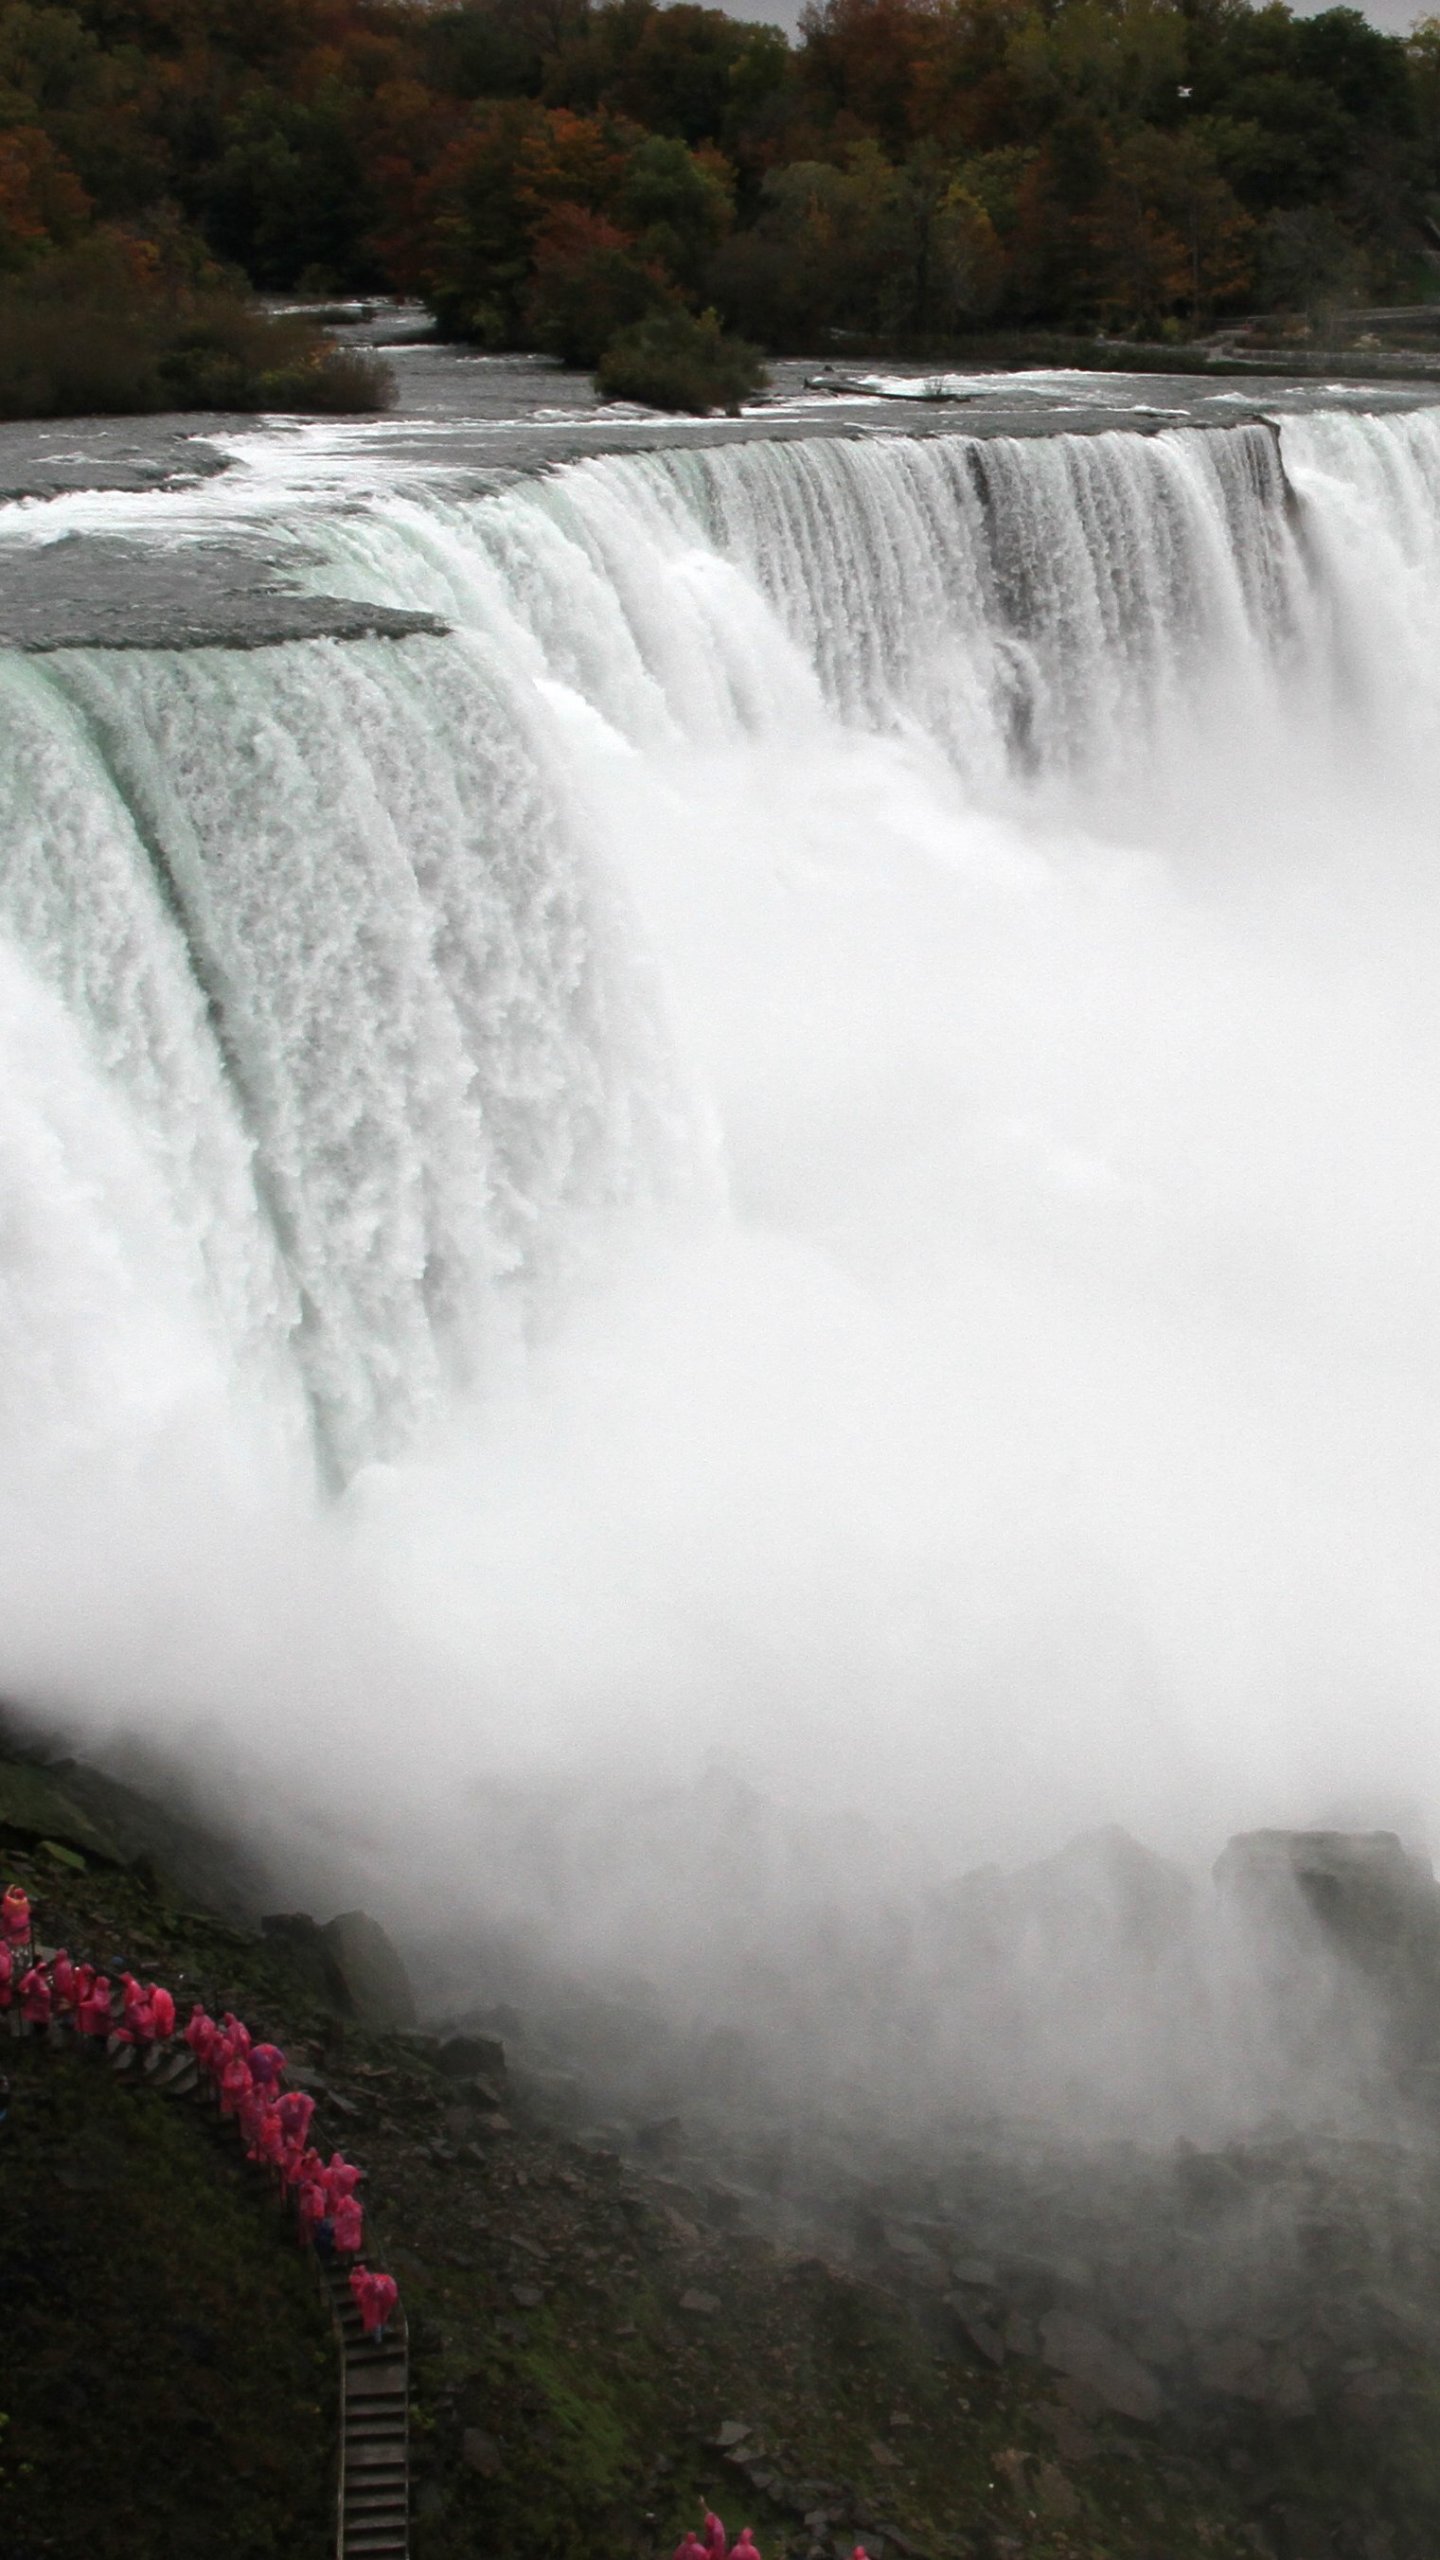 Niagara Falls Wallpaper - iPhone, Android & Desktop Backgrounds